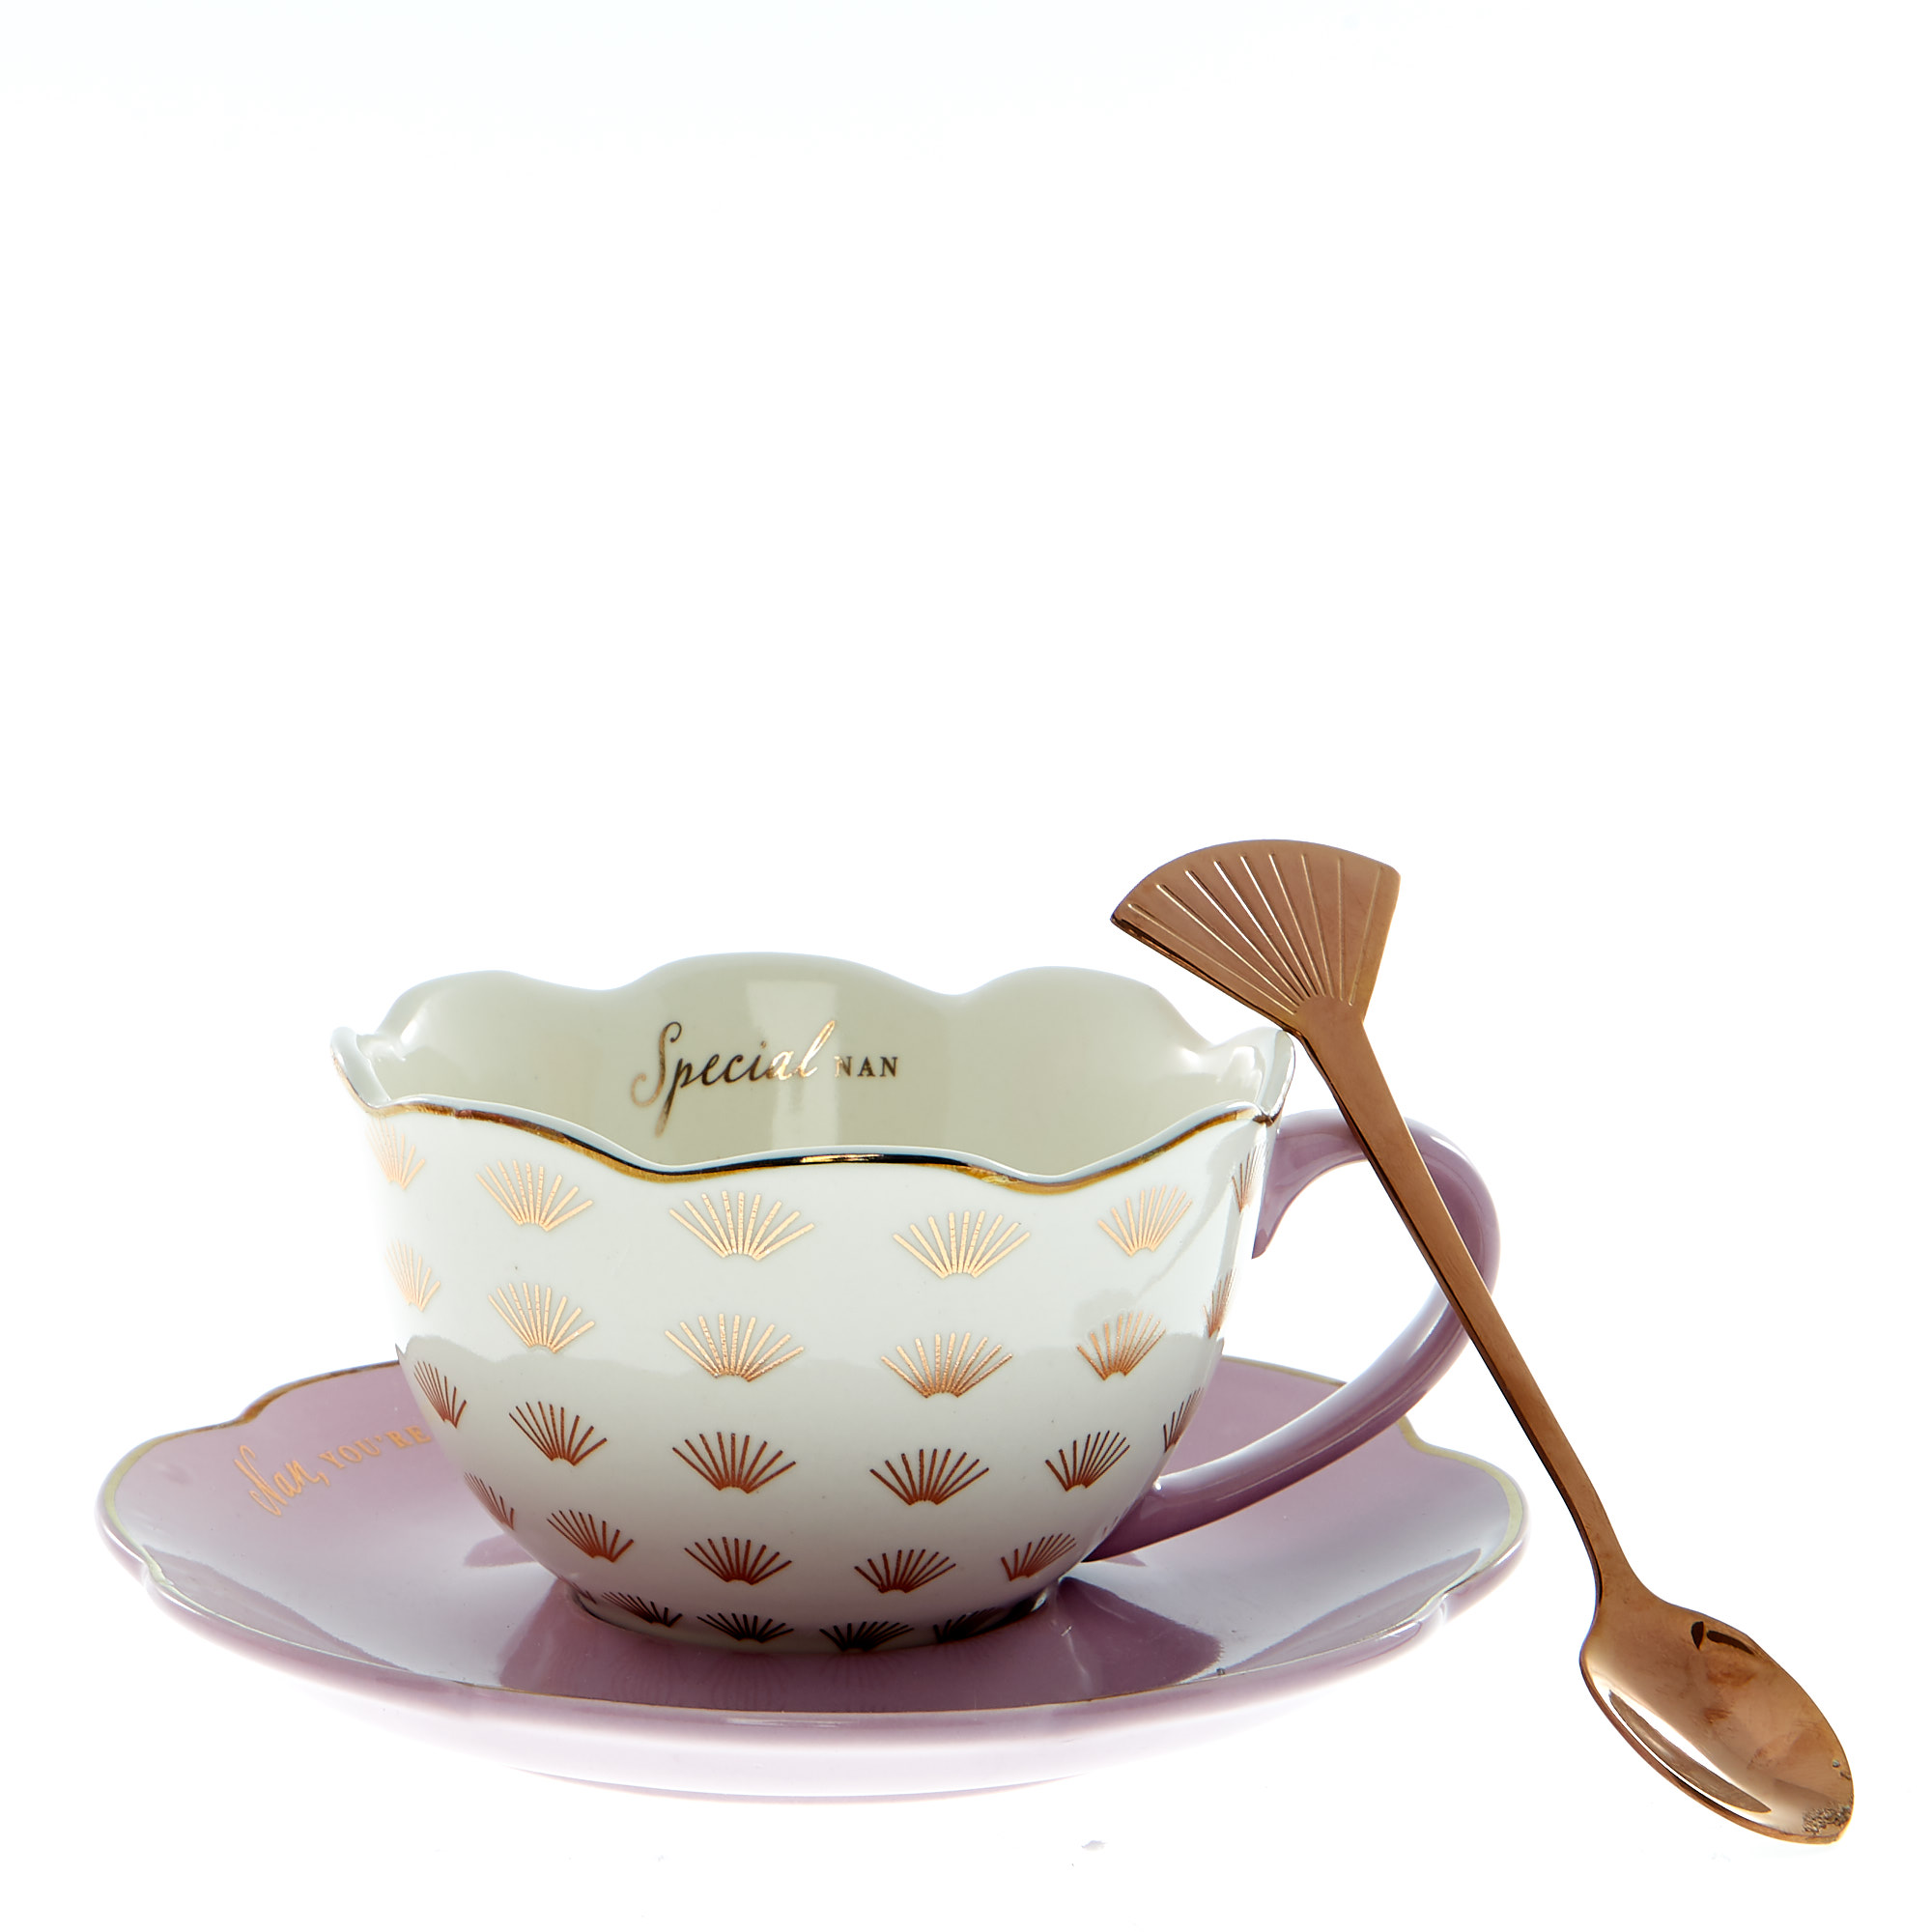 Special Nan Cup, Saucer & Spoon Set